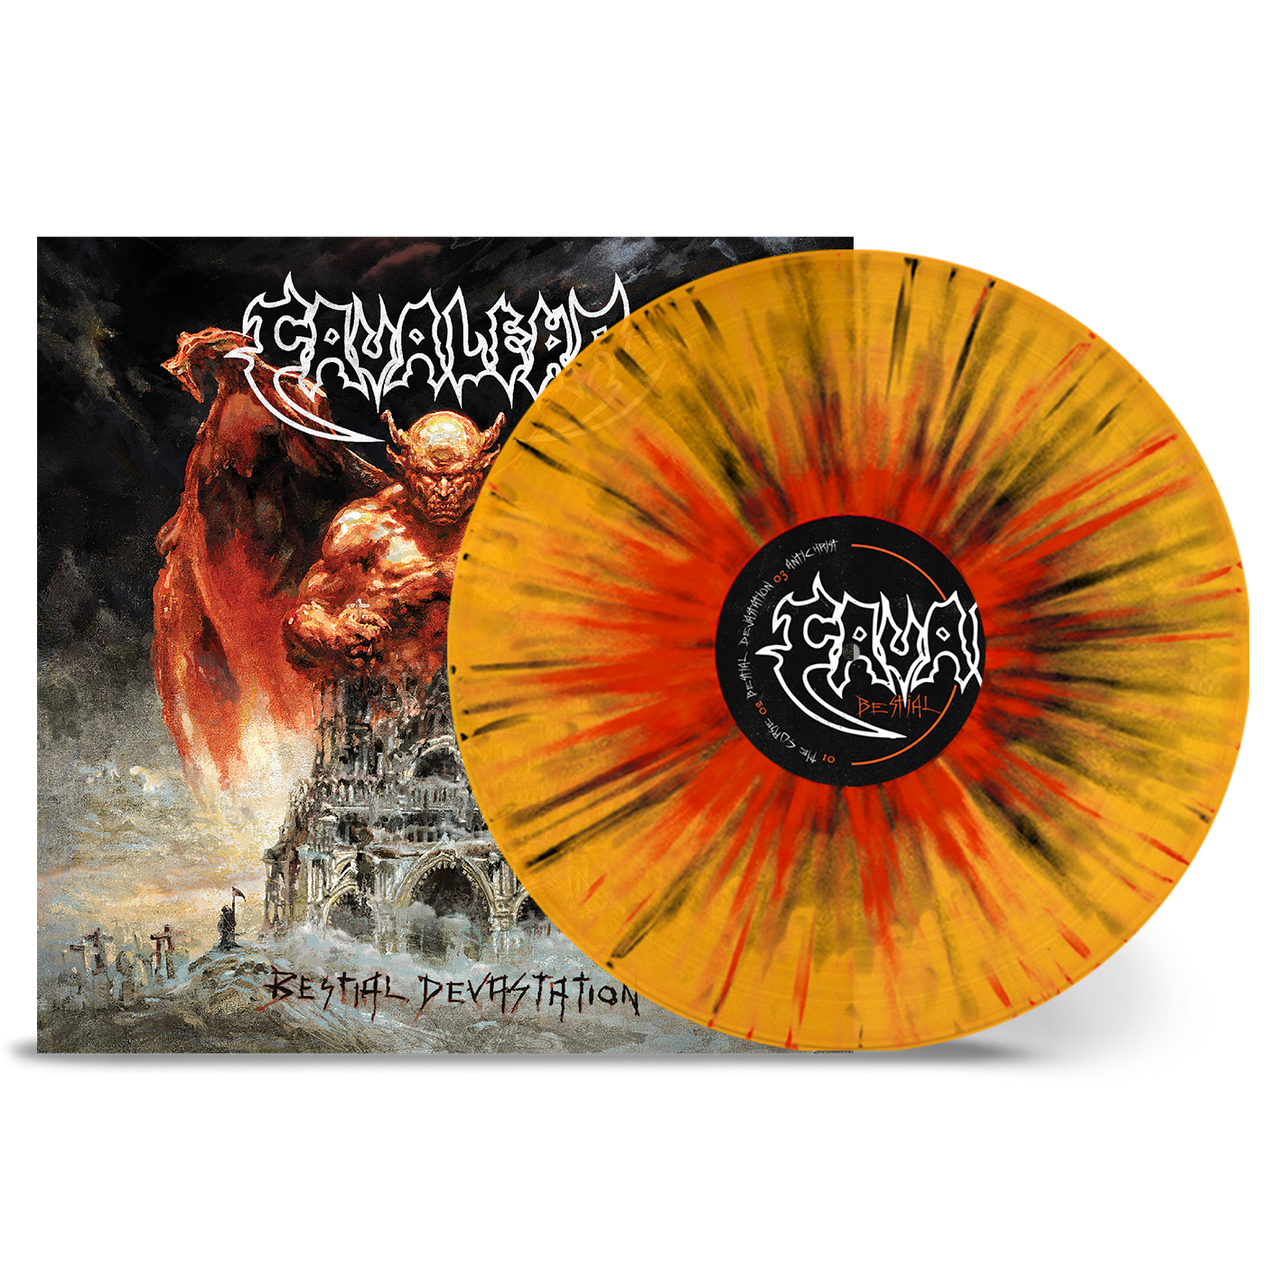 CAVALERA - Bestial Devastation - LP - Transparent Orange / Red / Black Splatter Vinyl [OCT 6]